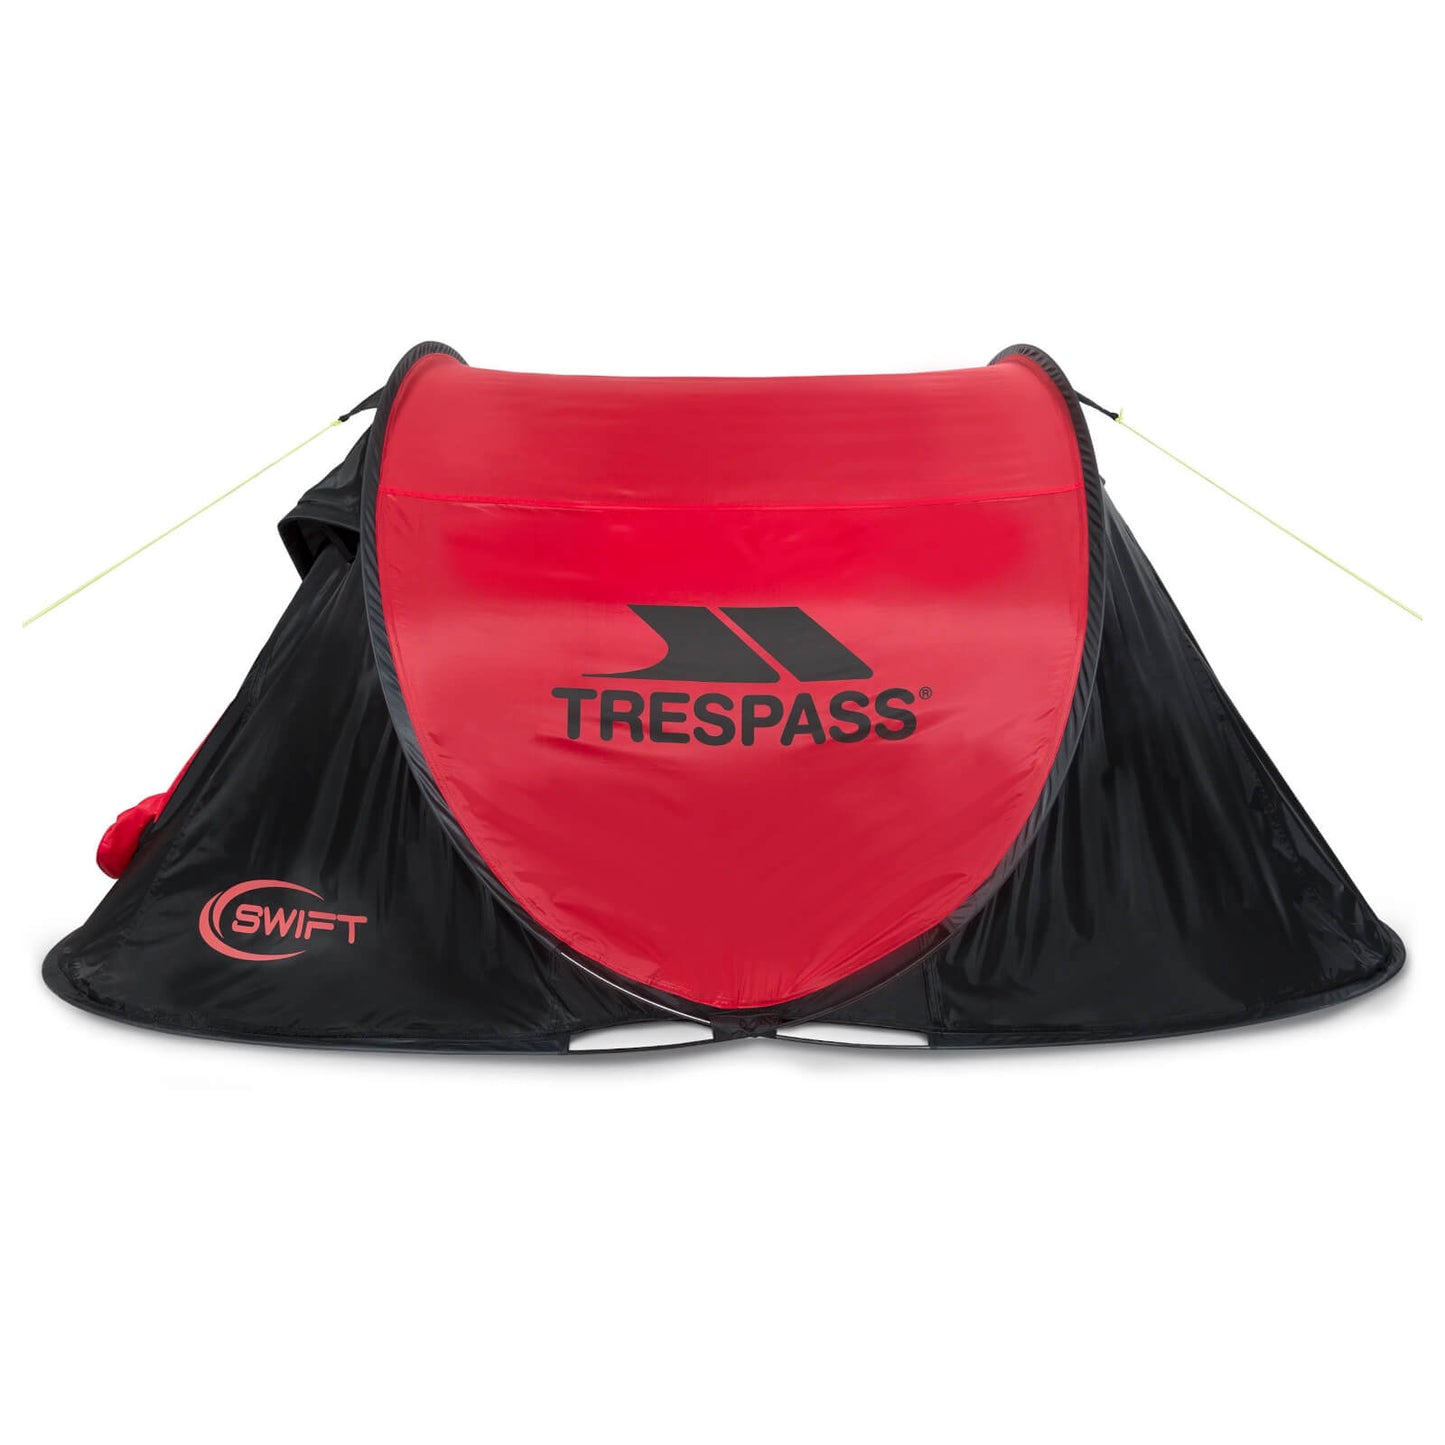 Trespass Swift Pop Up 2 Person Camping Tent Alternate 3